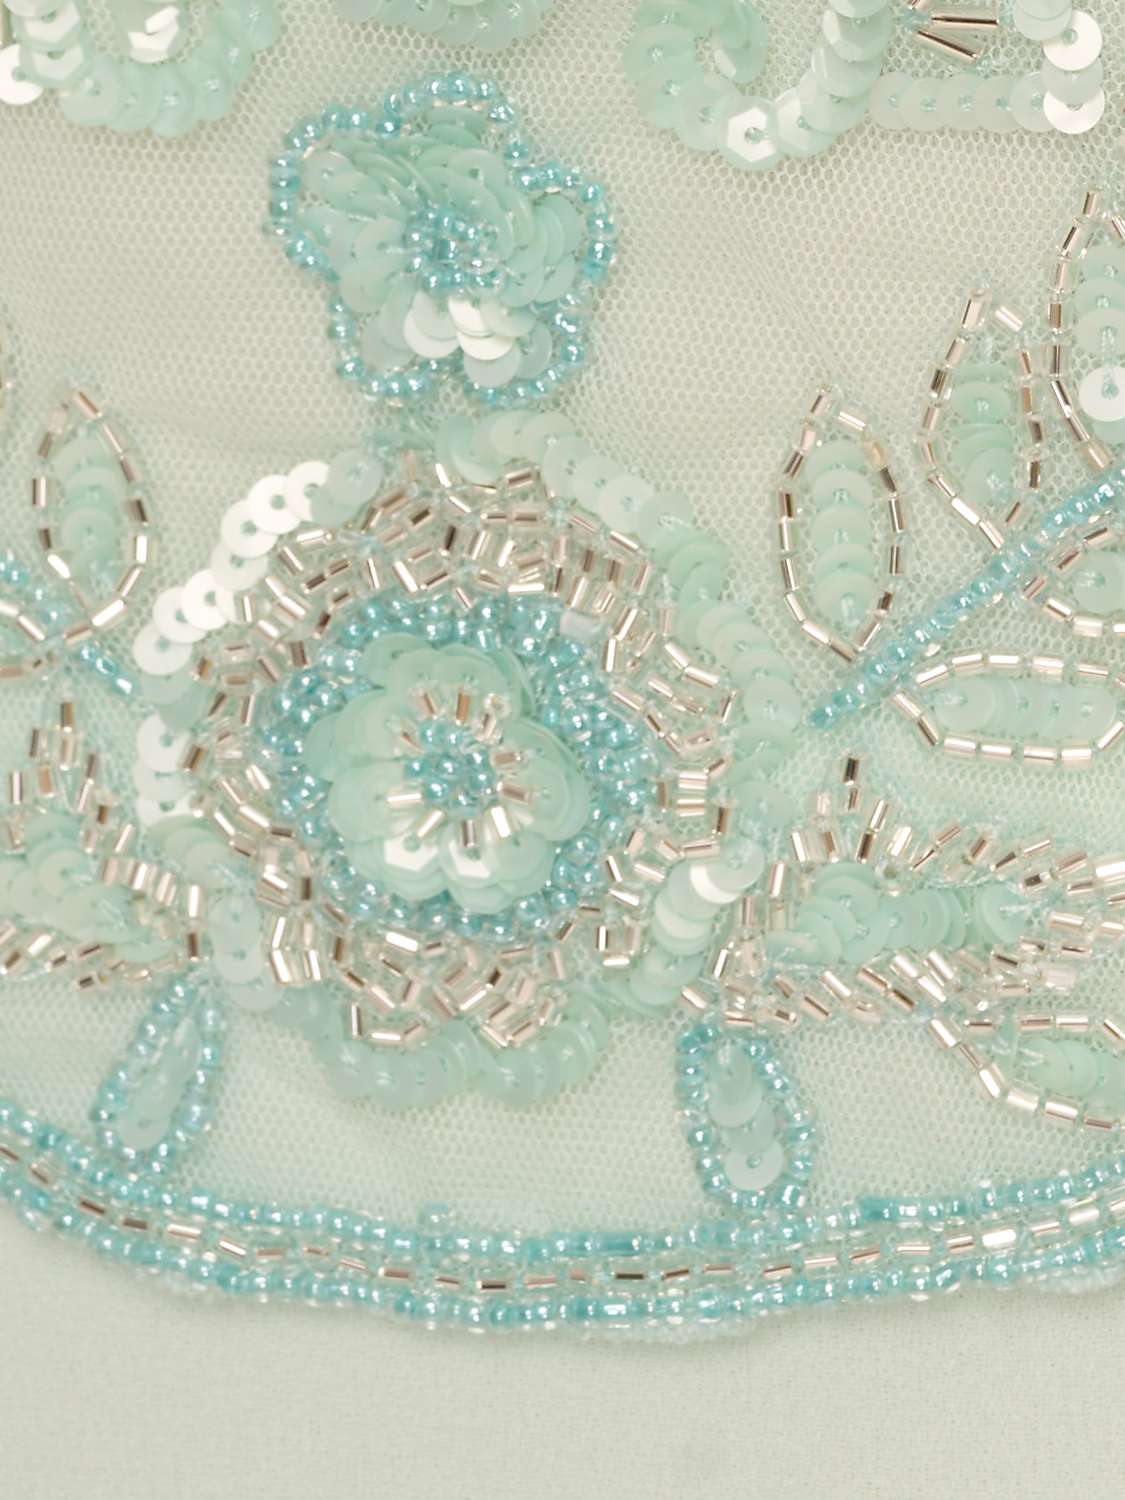 Buy Adrianna Papell Beaded Chiffon Maxi Dress, Mint Glass Online at johnlewis.com